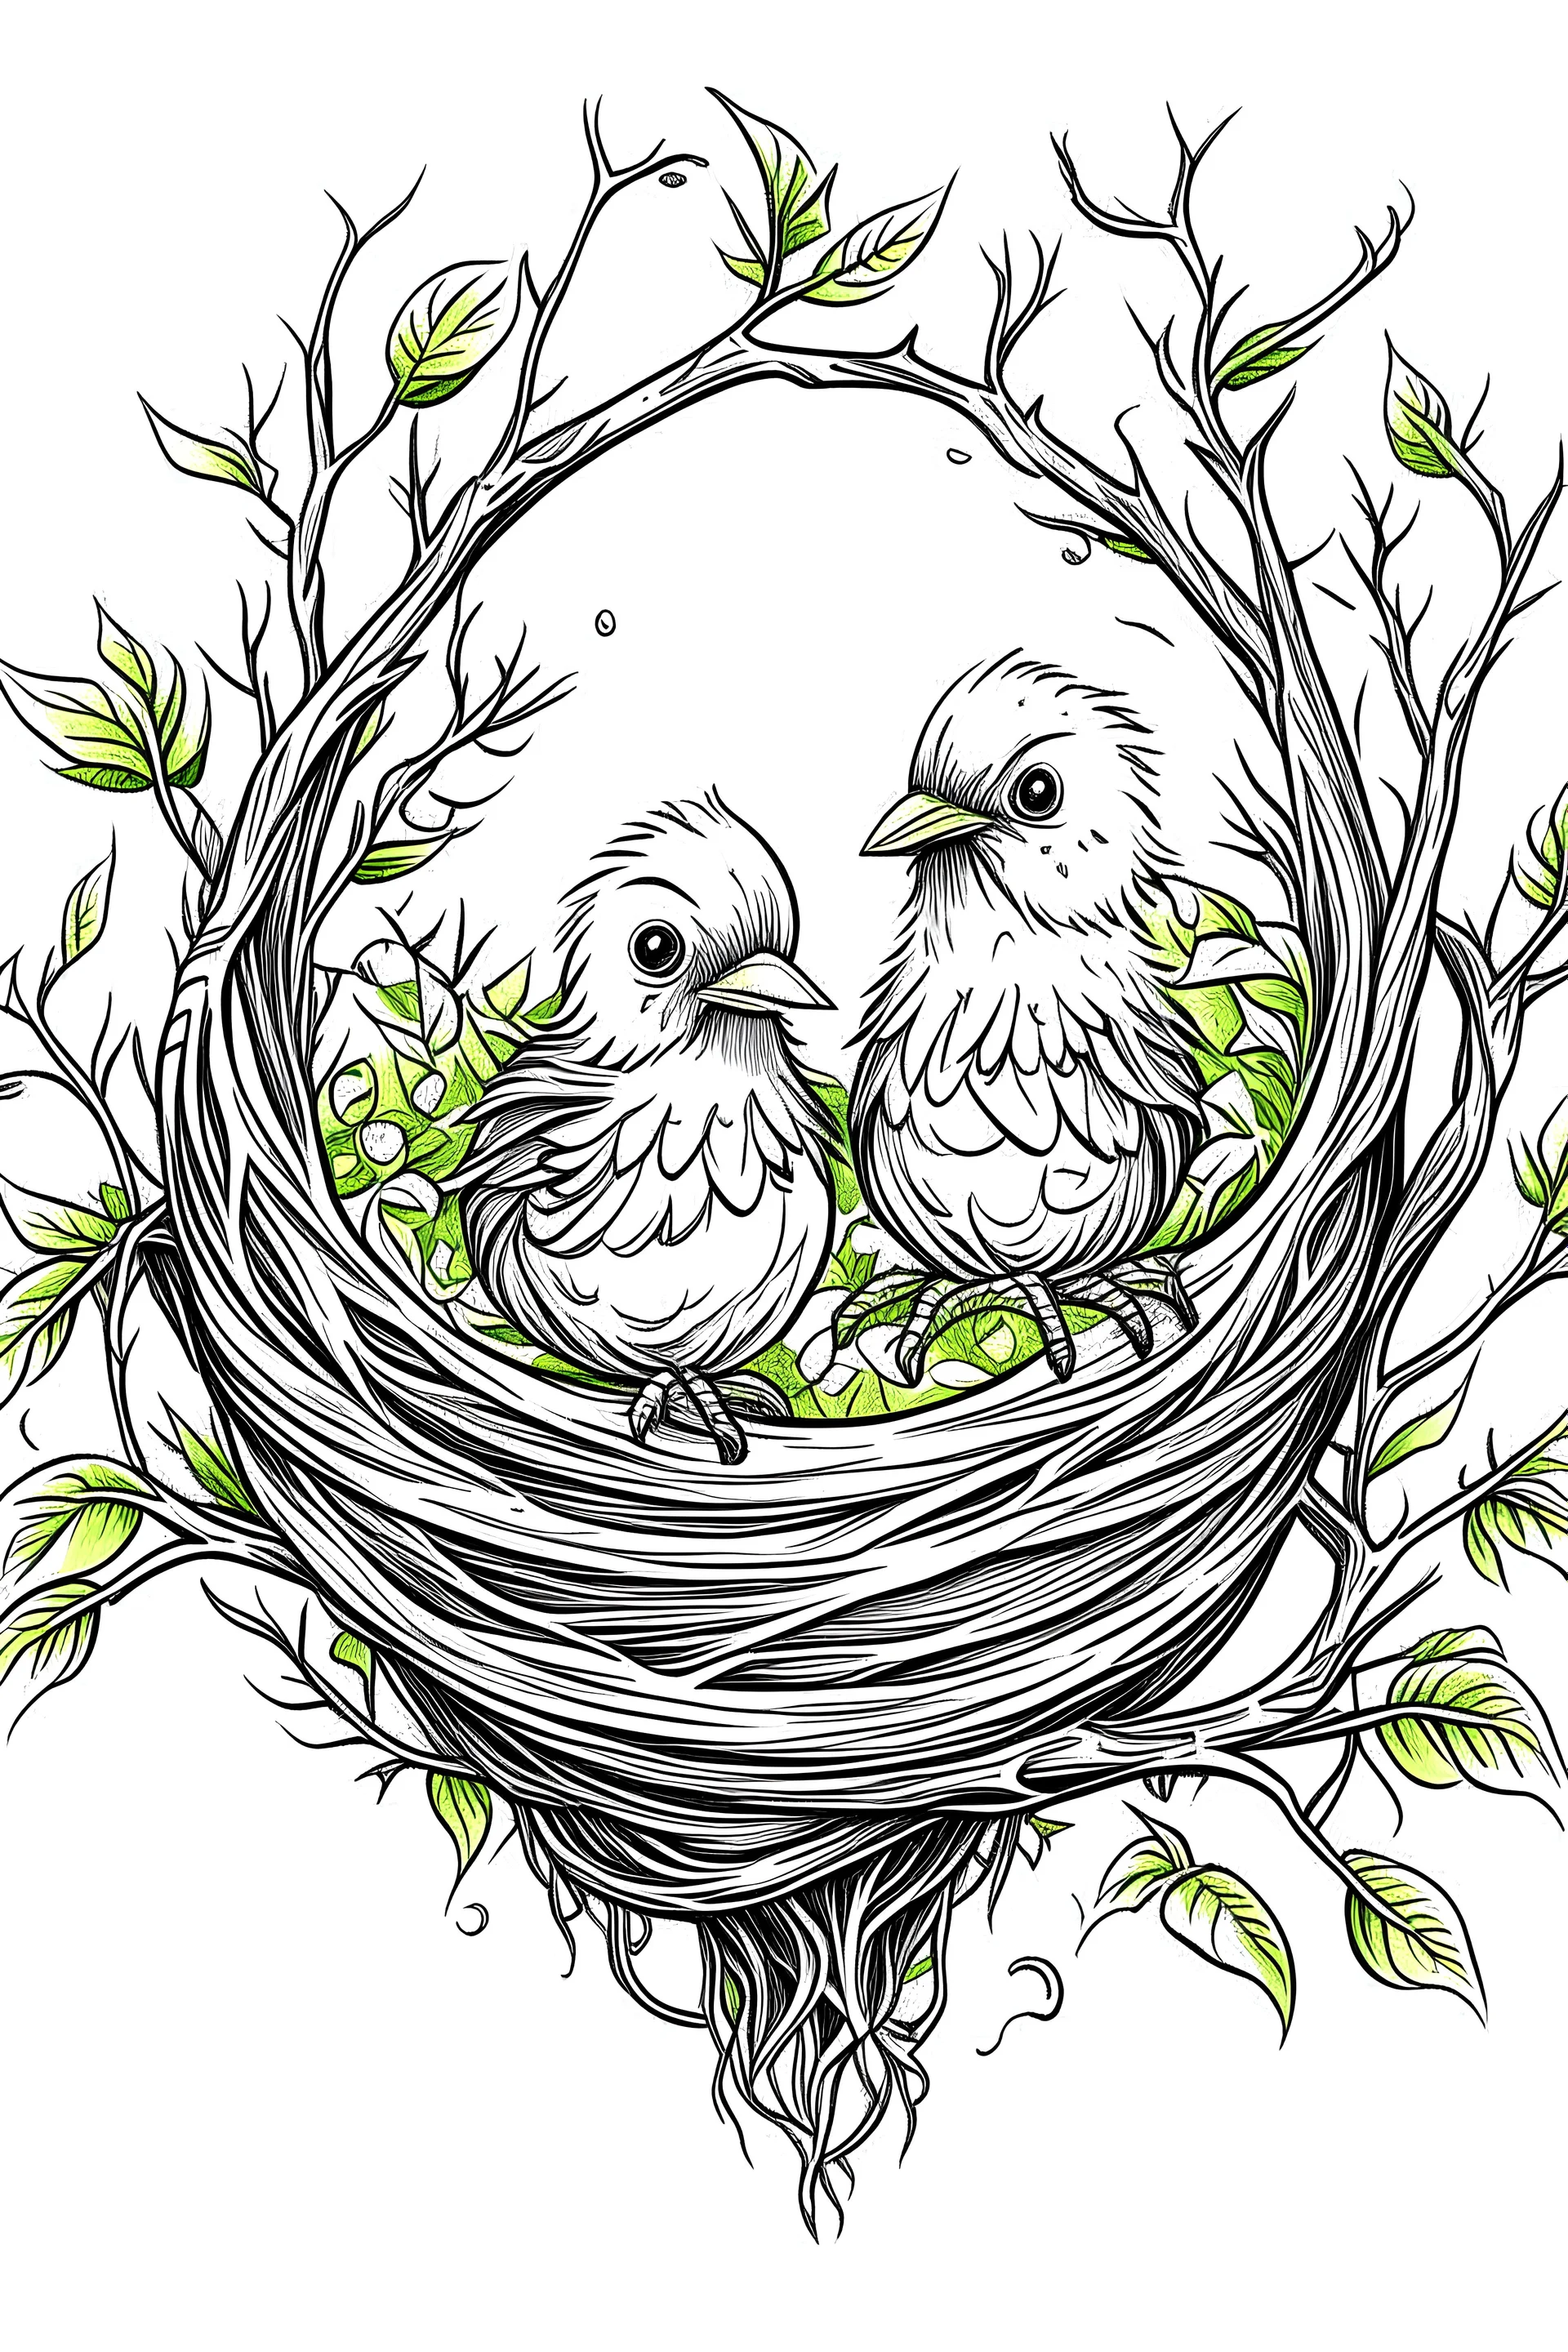 Cute bird coloring page Royalty Free Vector Image